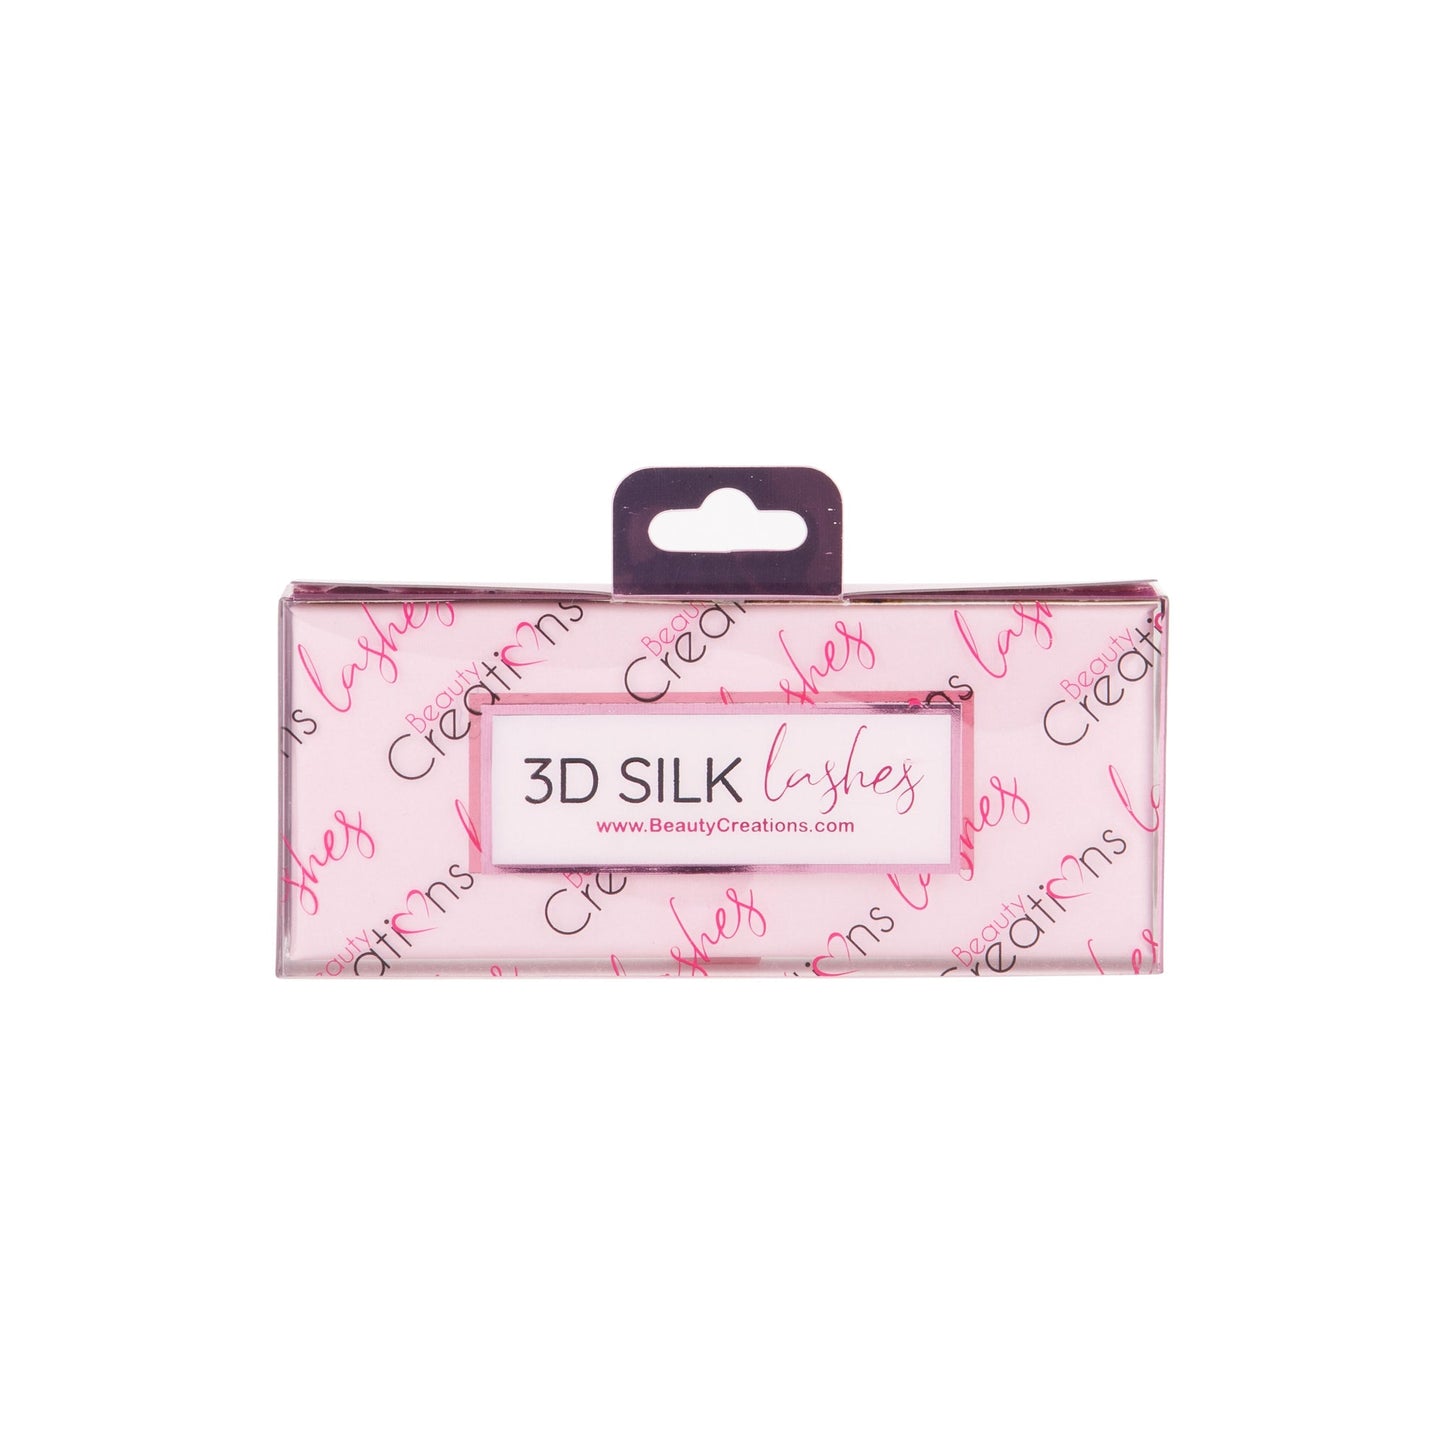 Swerve - 3D Silk Lashes